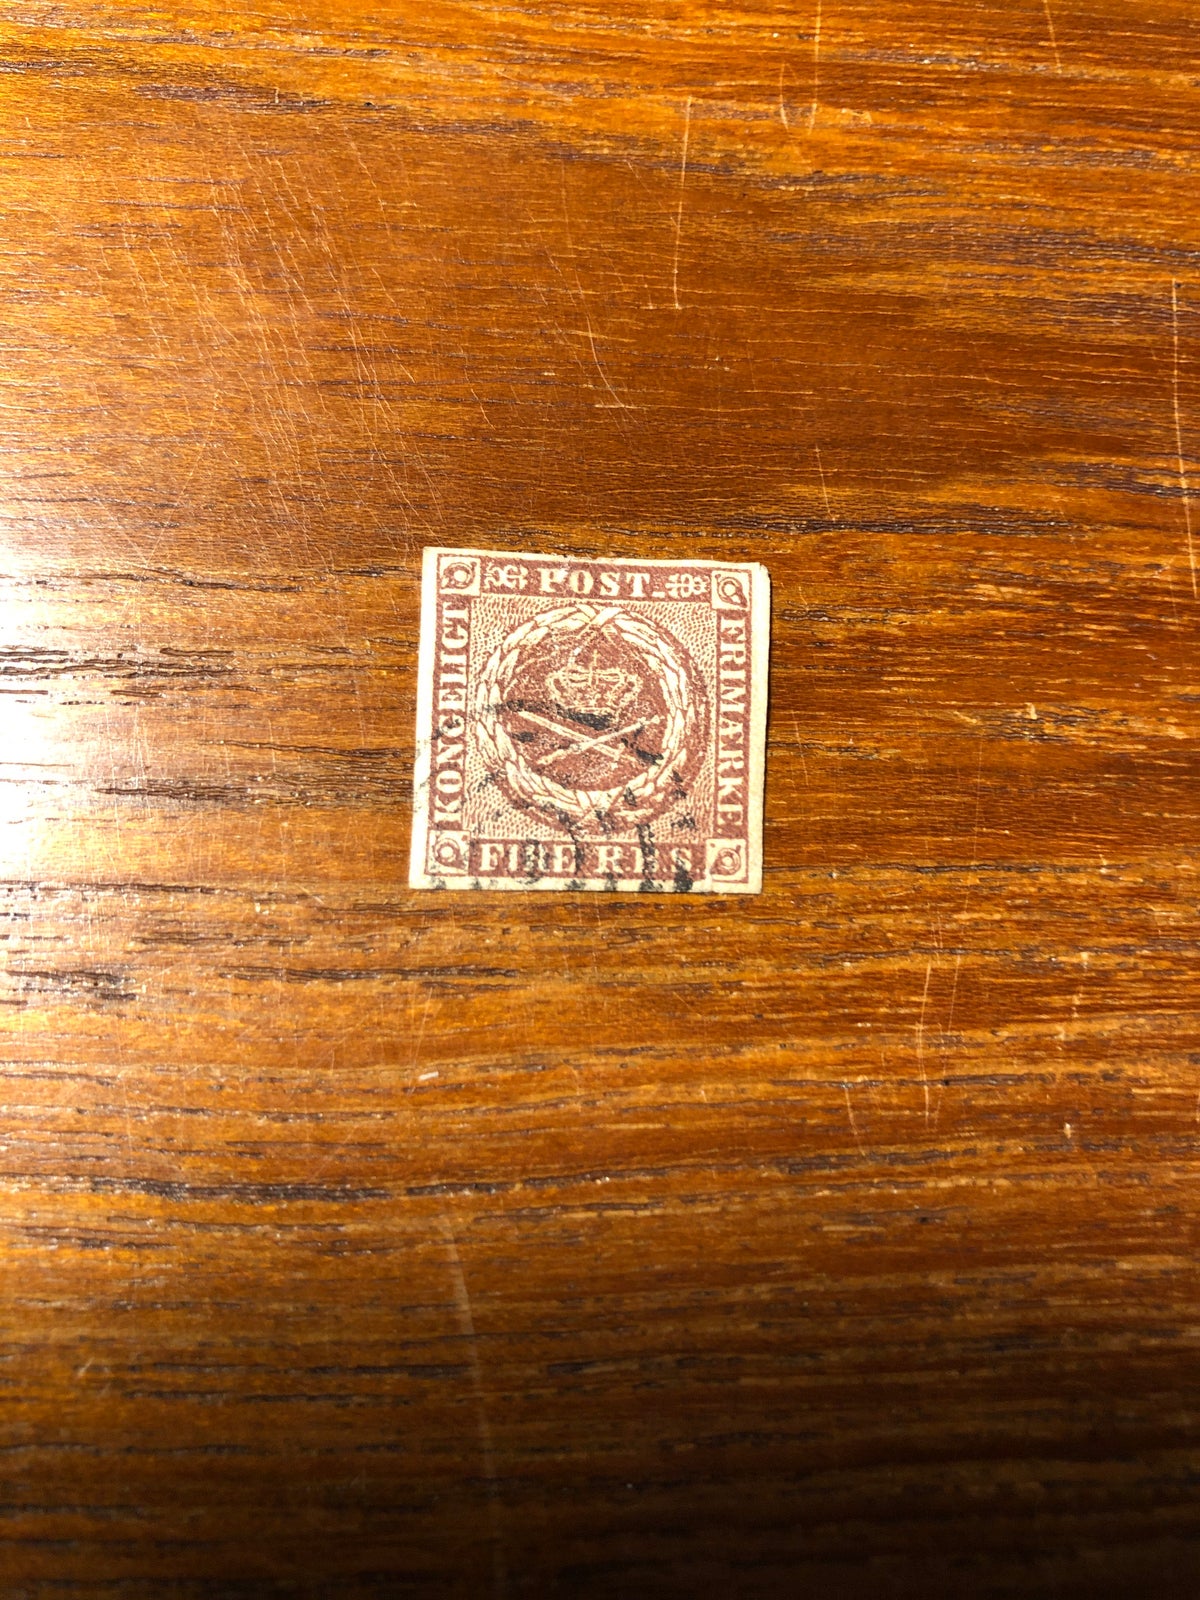 Danmark, stemplet, Danmarks første frimærke fra 1851